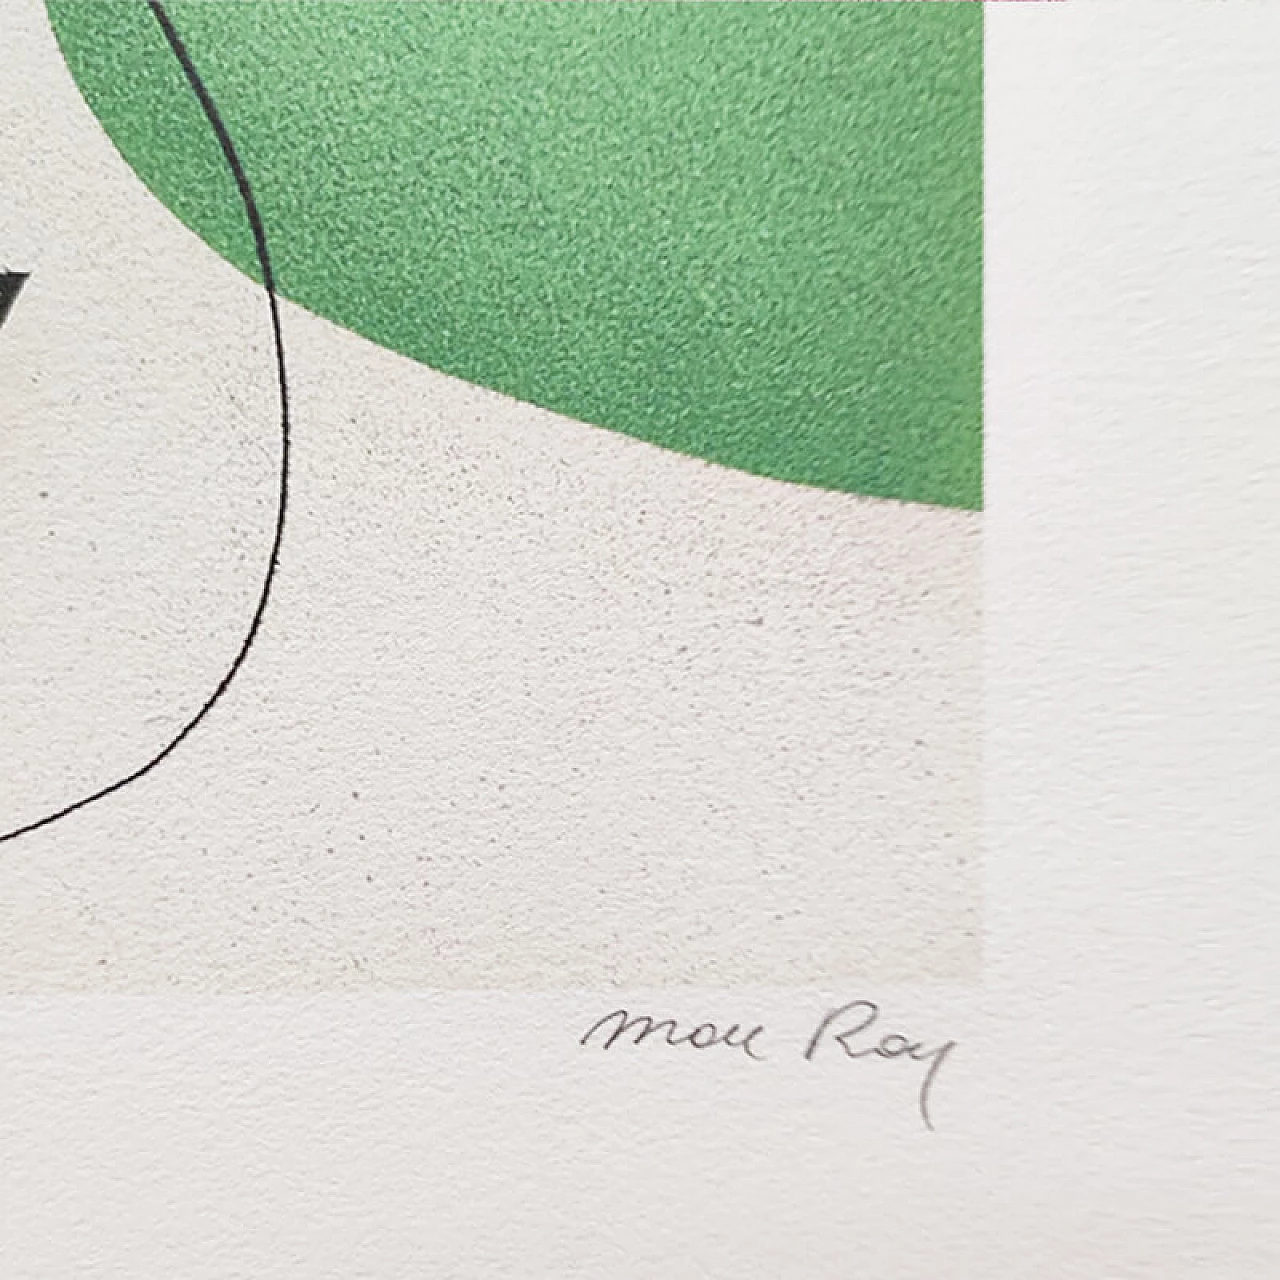 Man Ray, aerograph, original lithograph, 1970s 8